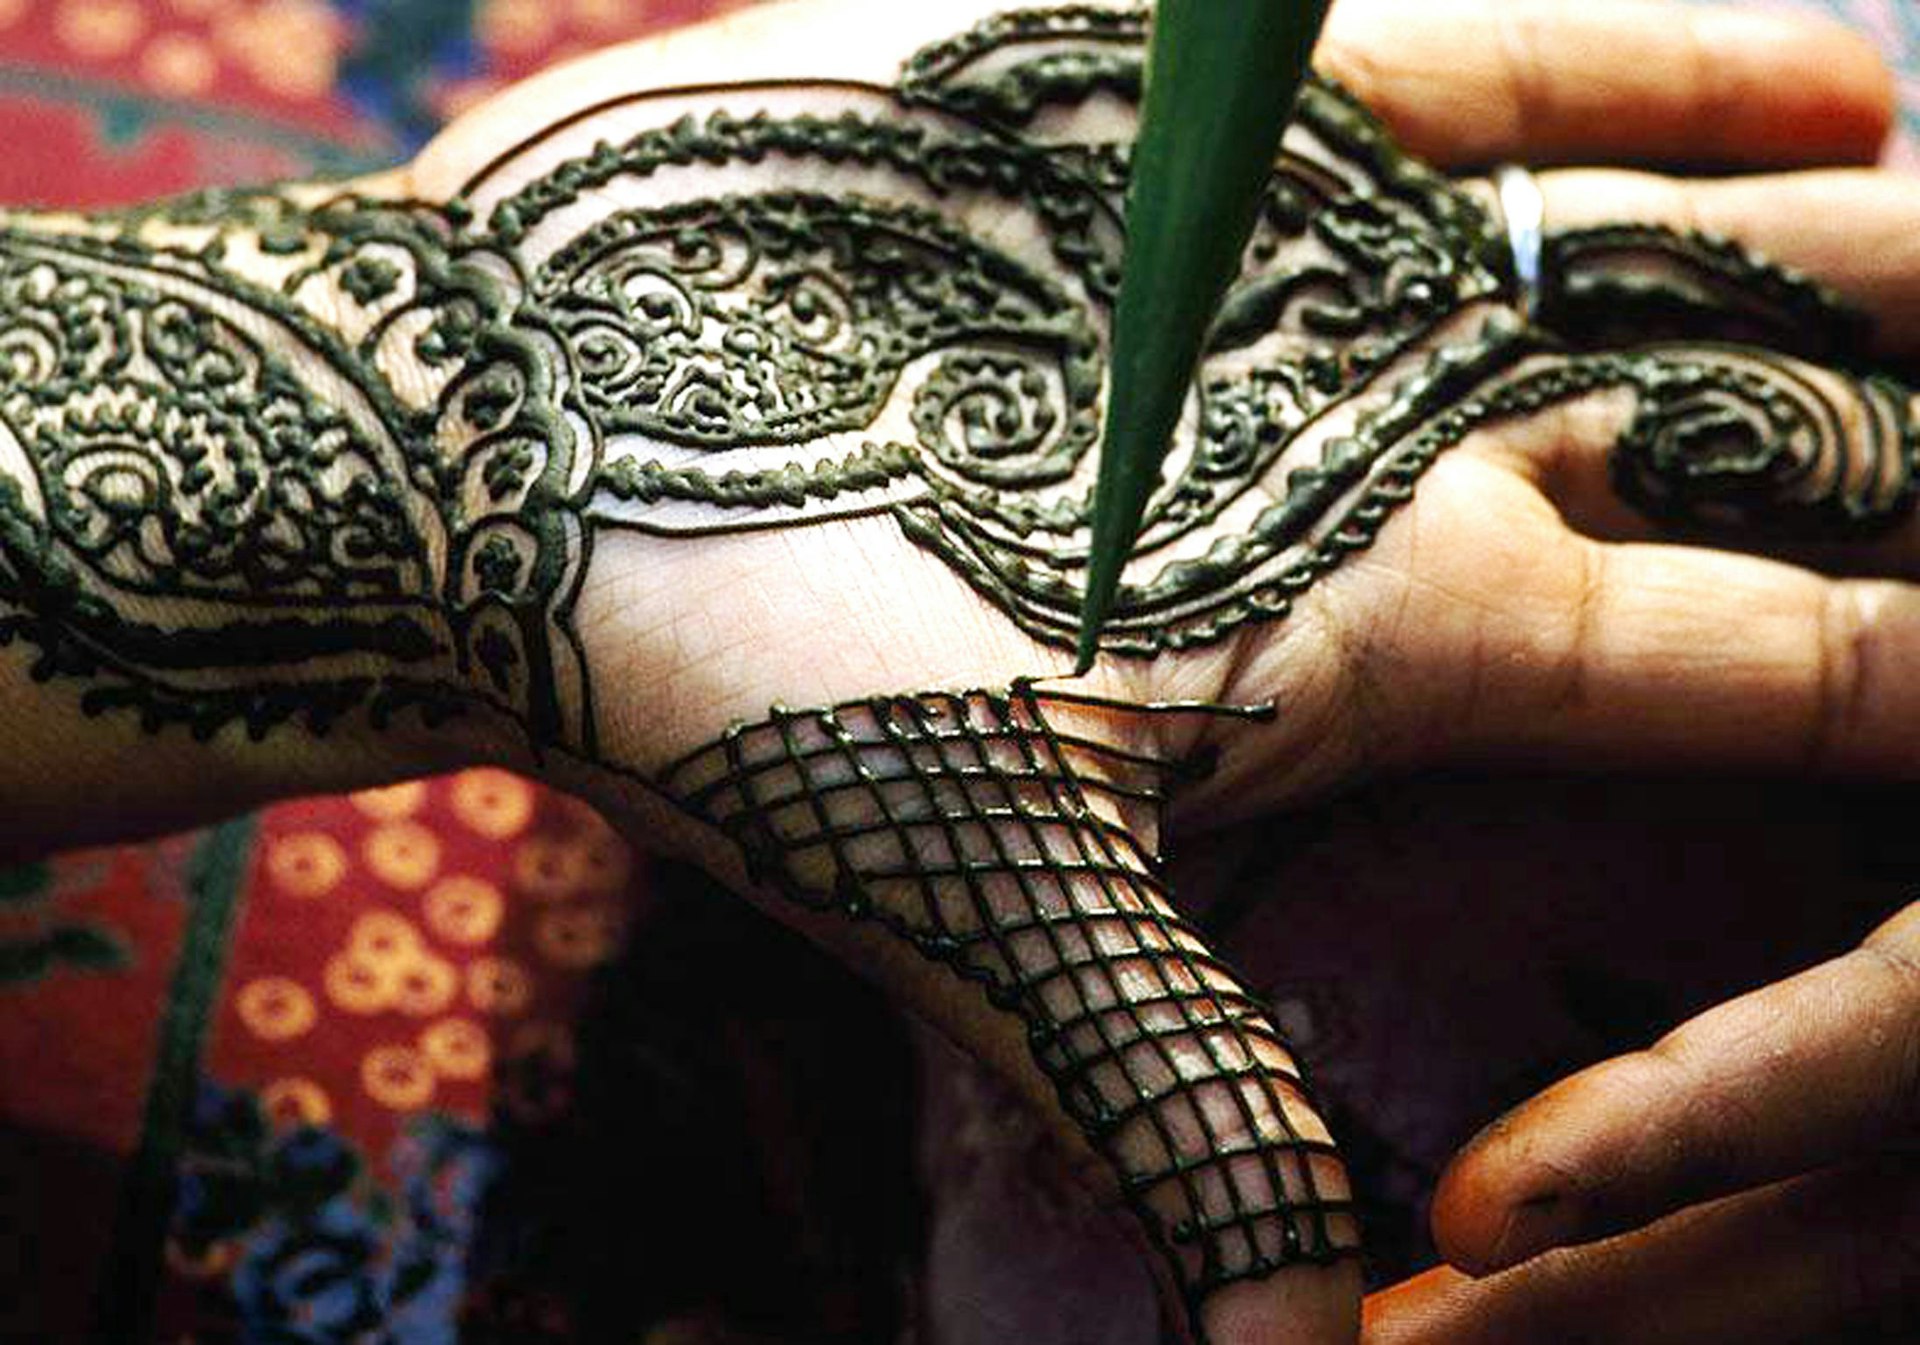 An artist designing a henna tattoo on a woman's hand in Dubai.